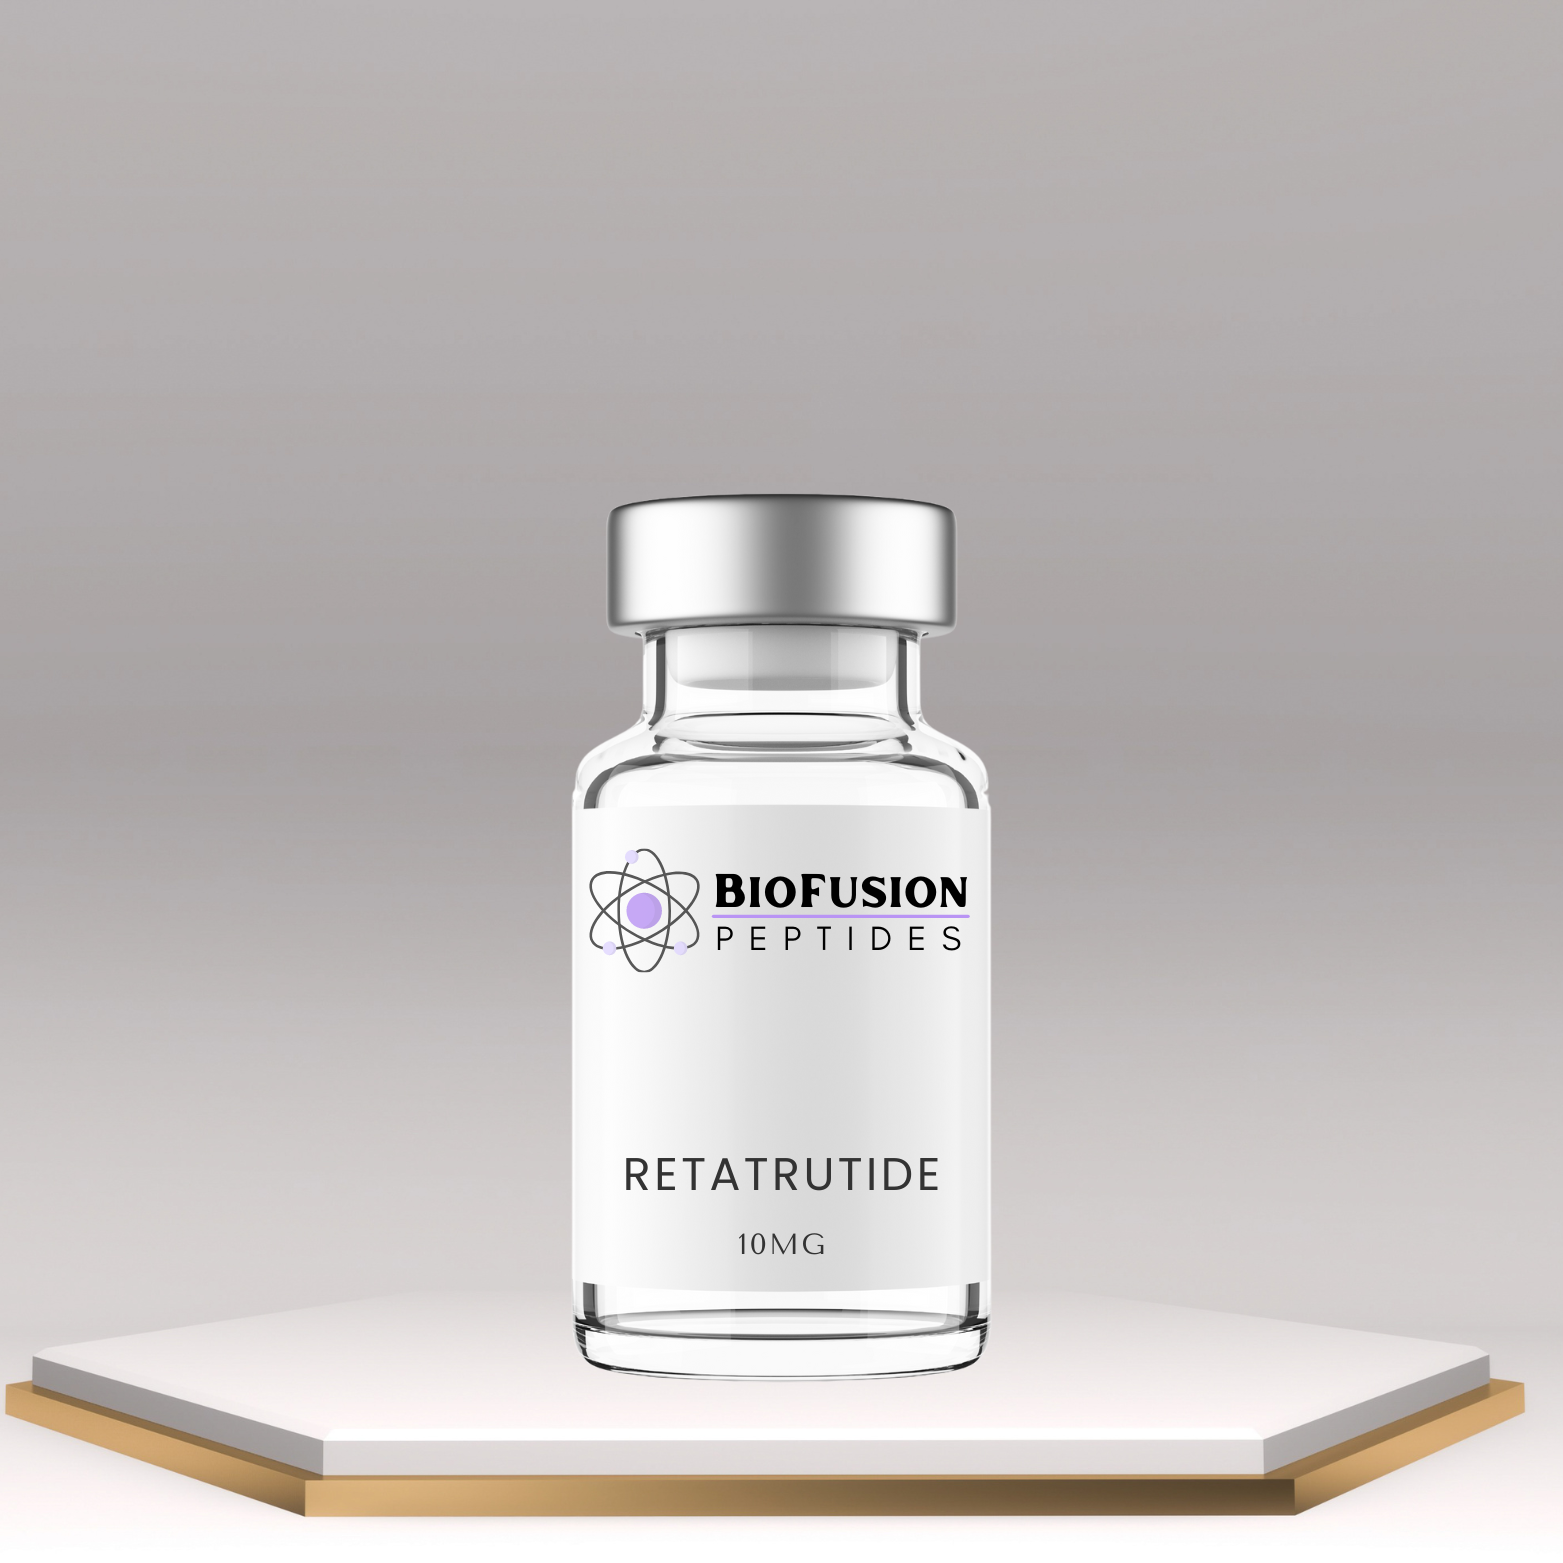 BioFusion Peptides Retatrutide 10mg vial